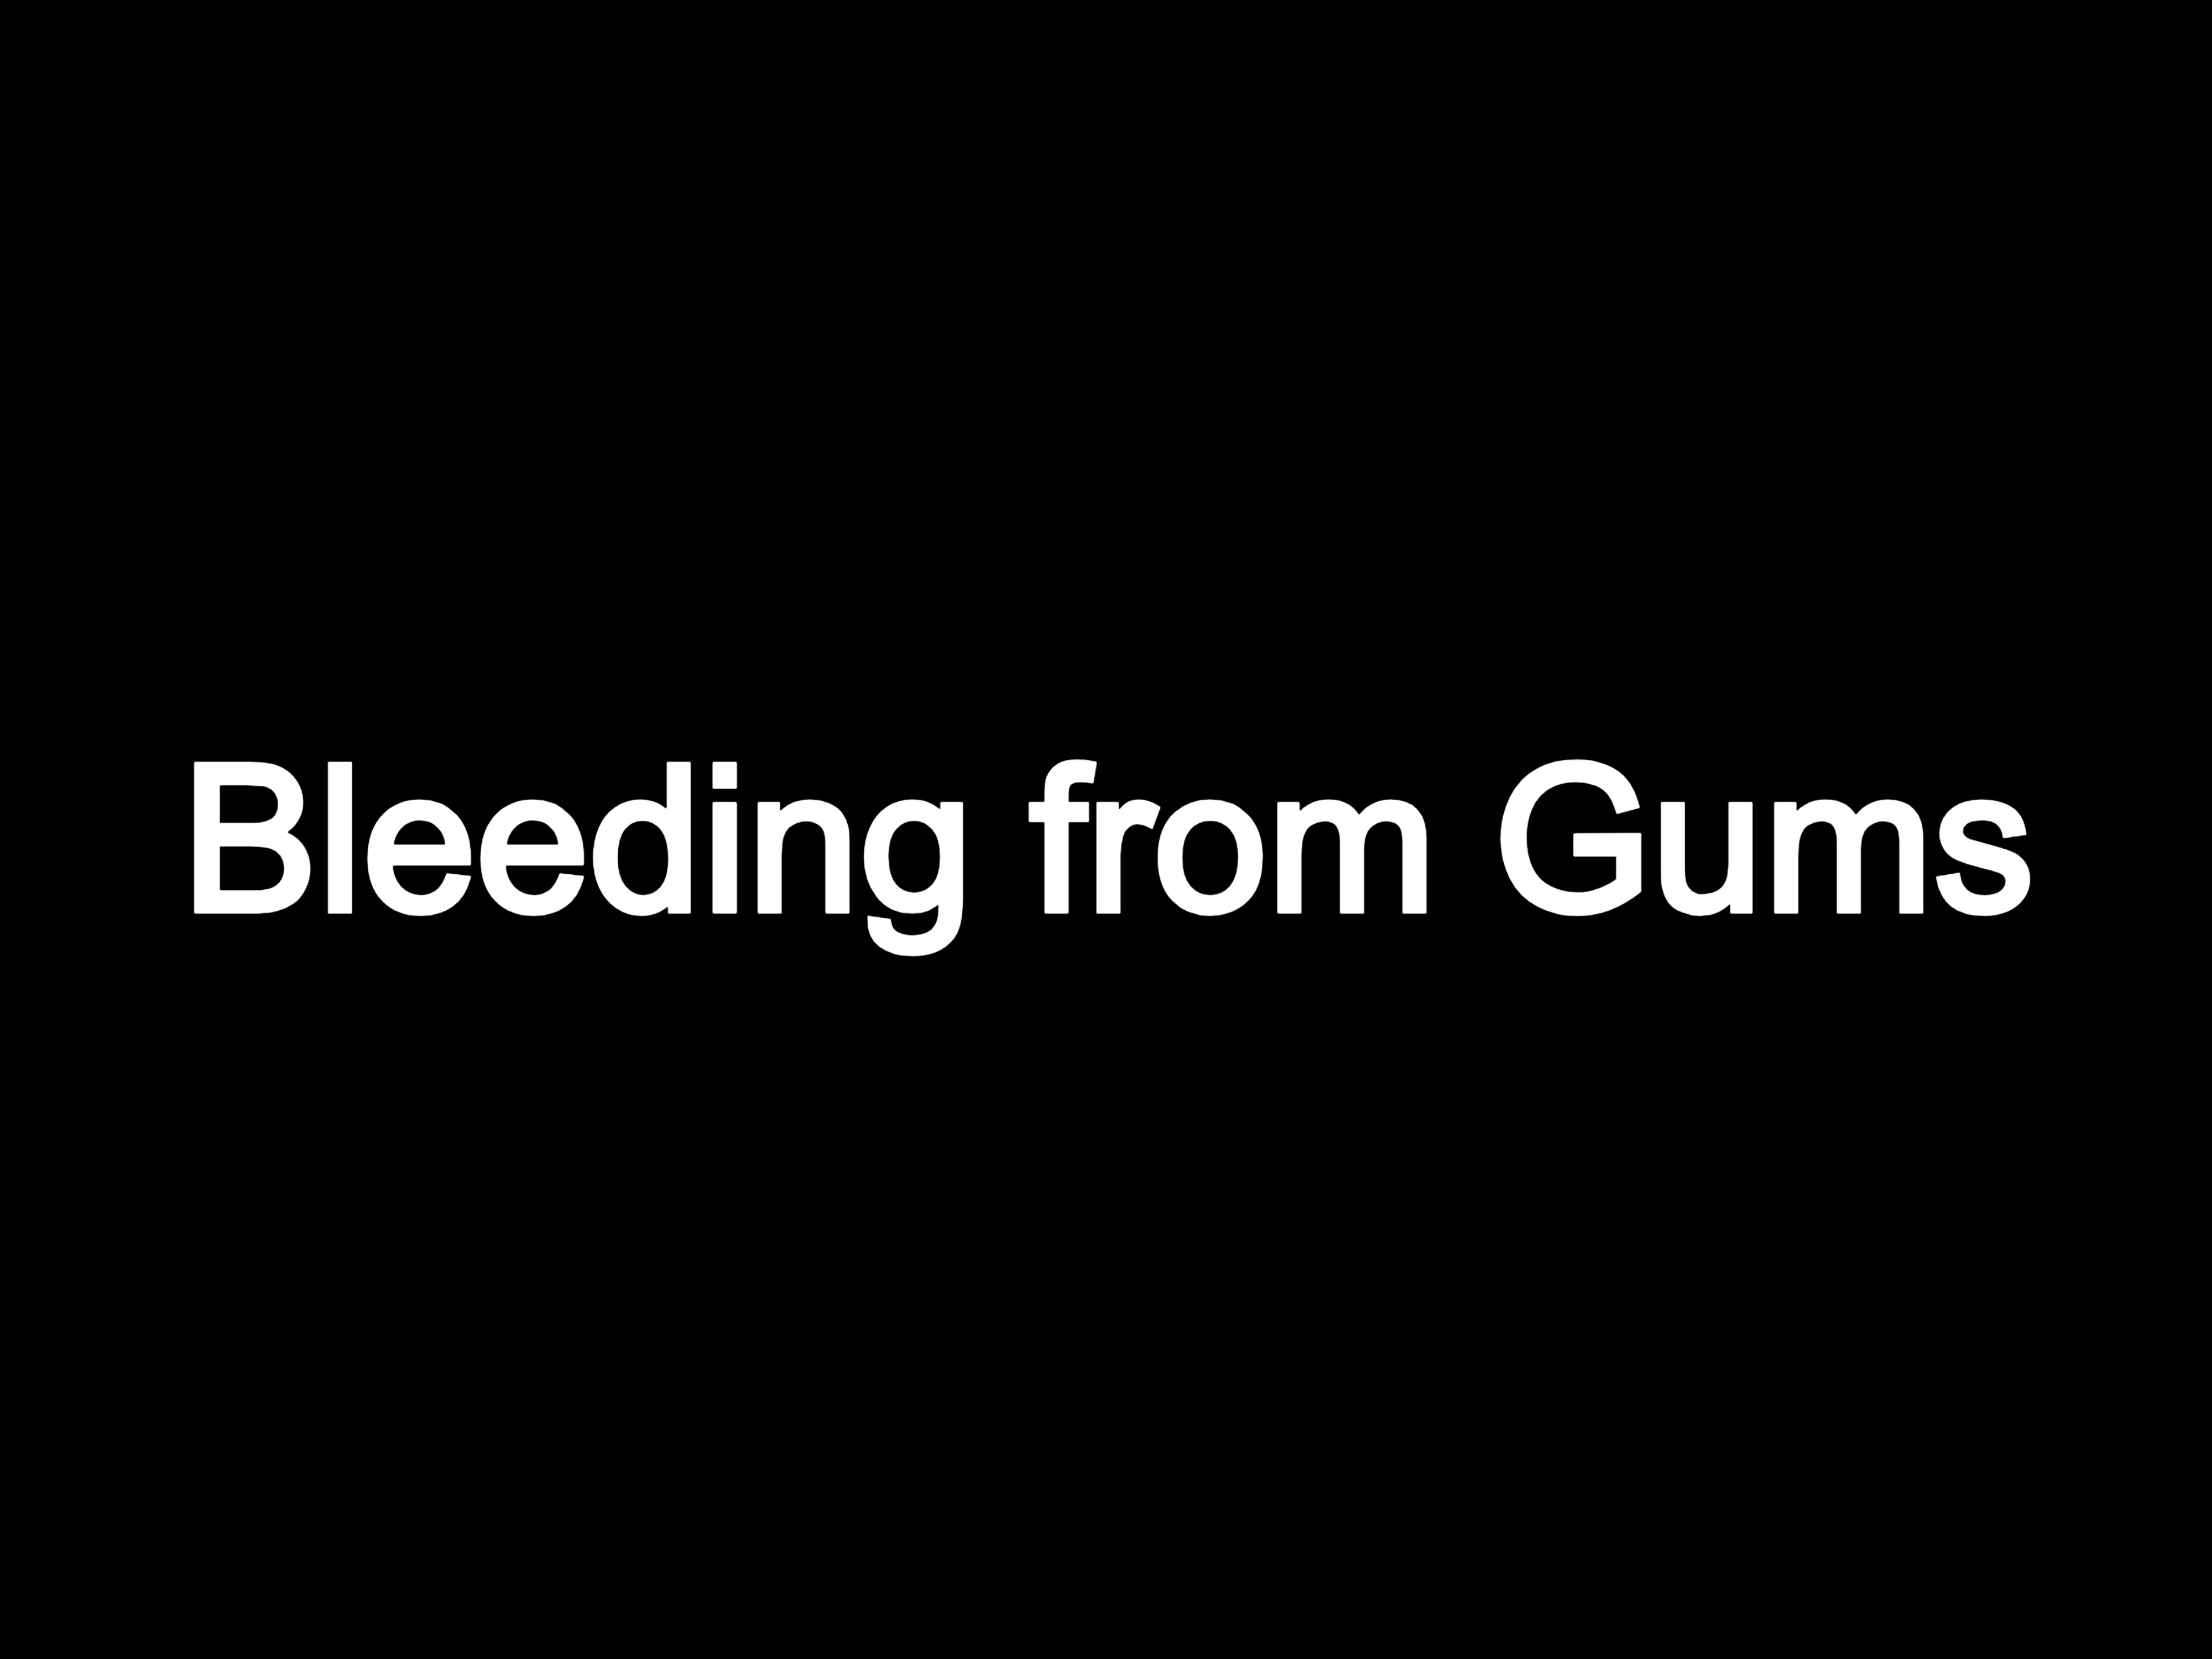 Bleeding from gums